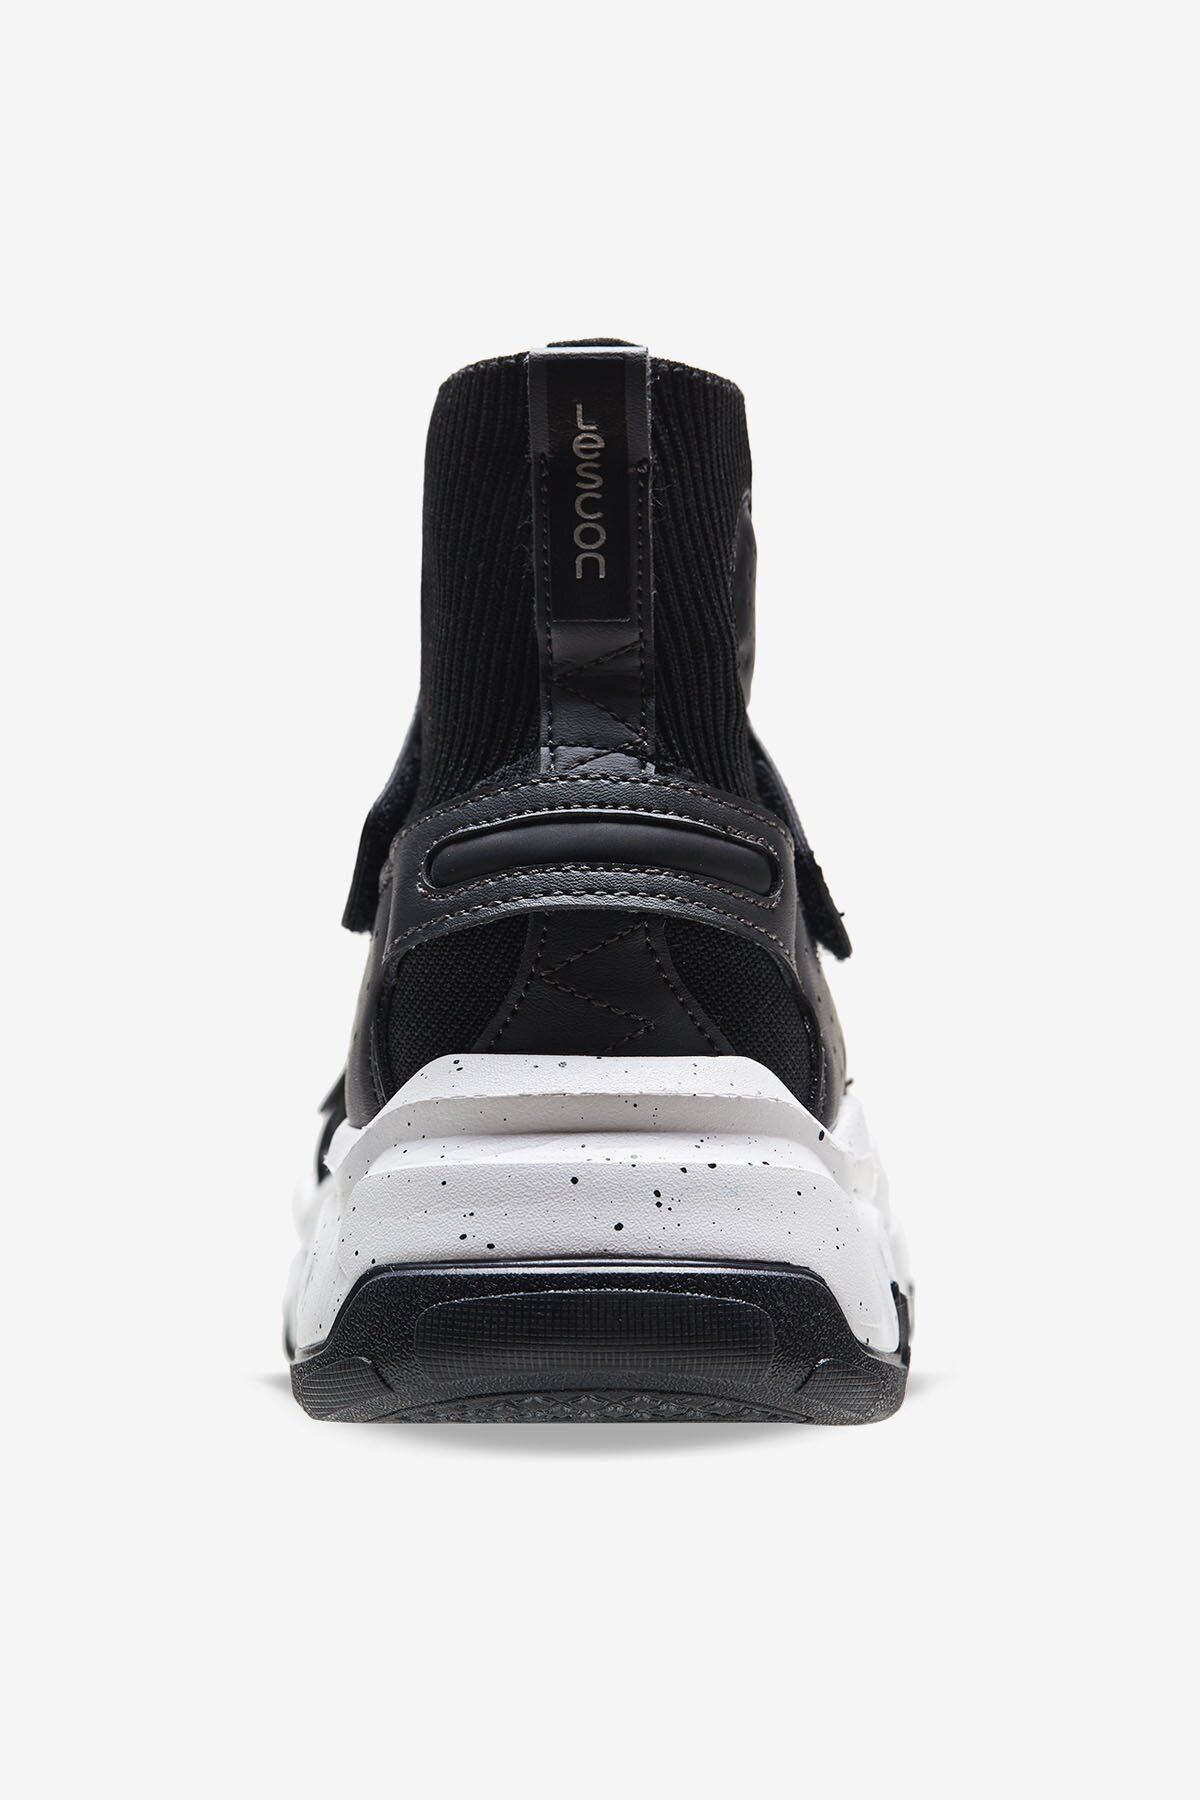 Lescon کفش کتانی مردانه ورزشی مدل easystep onyx